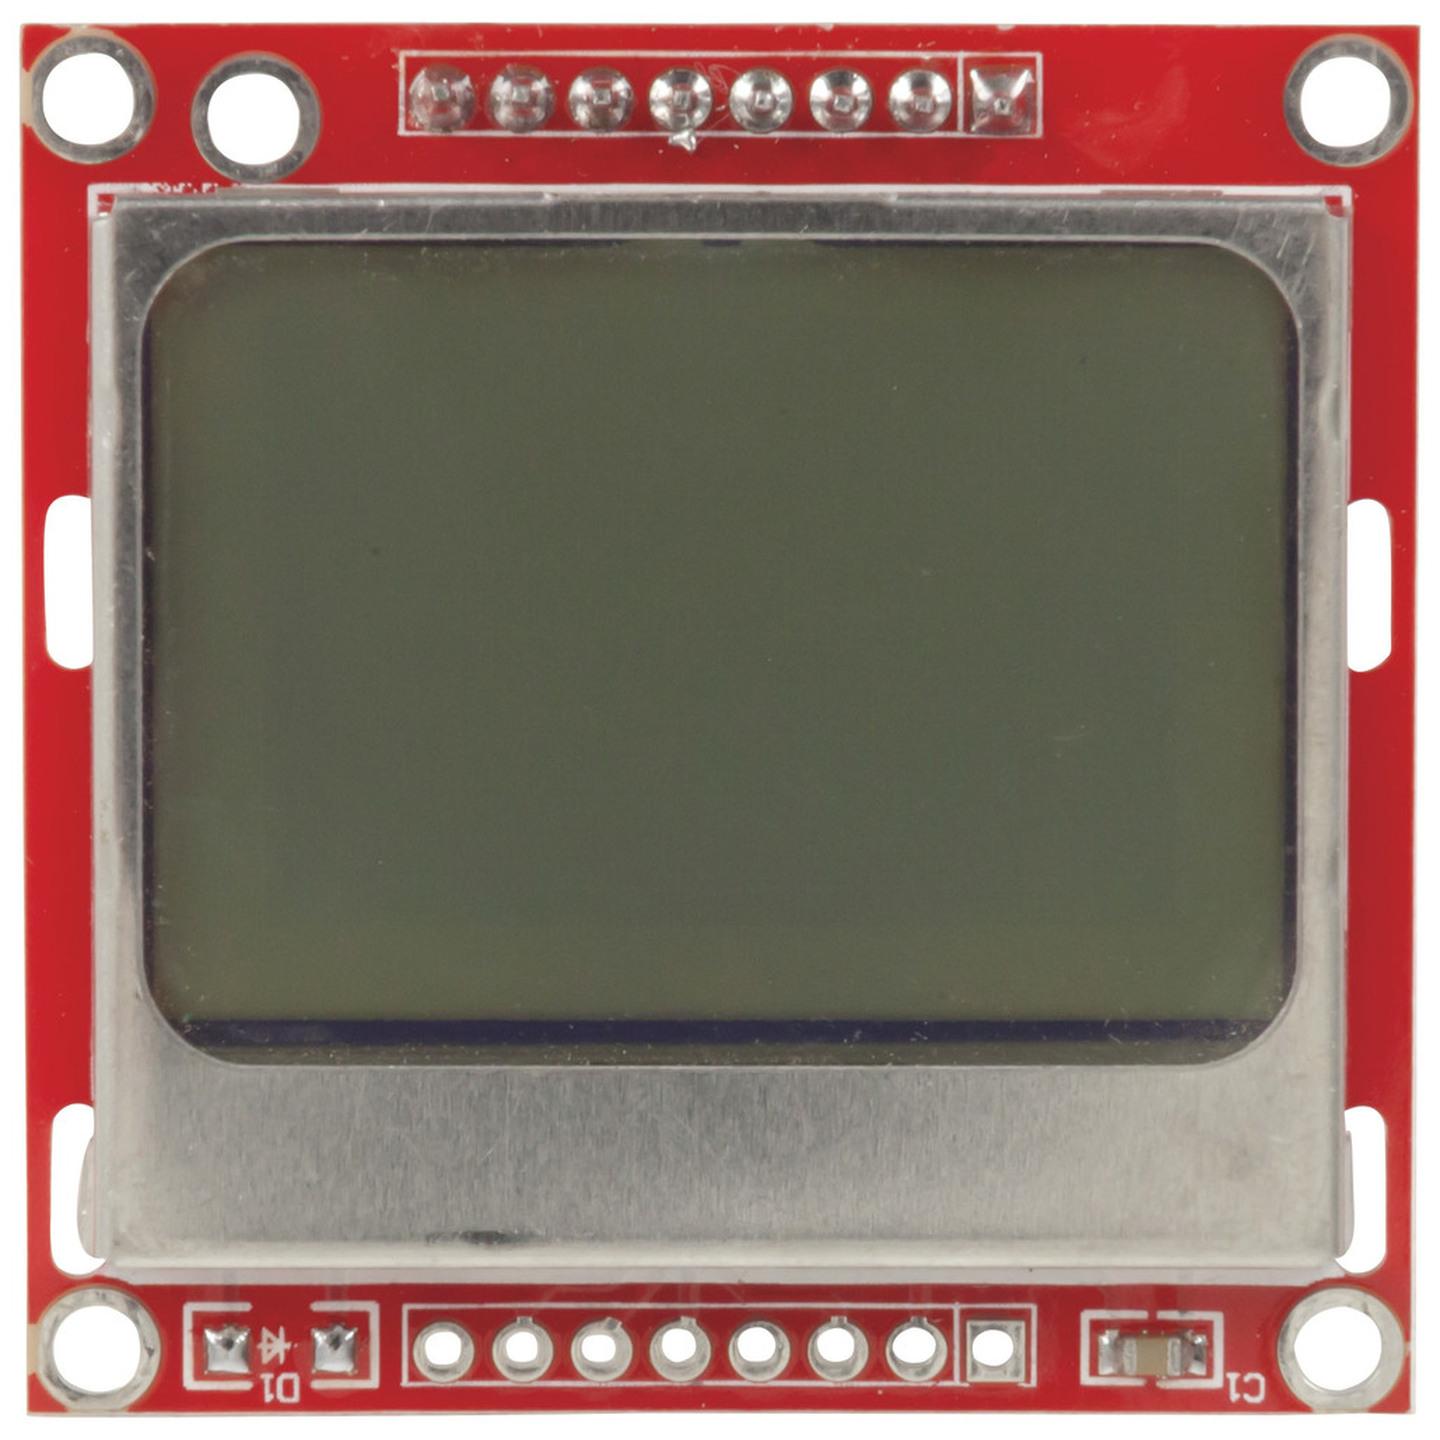 Arduino Compatible 84x48 Dot Matrix LCD Display Module